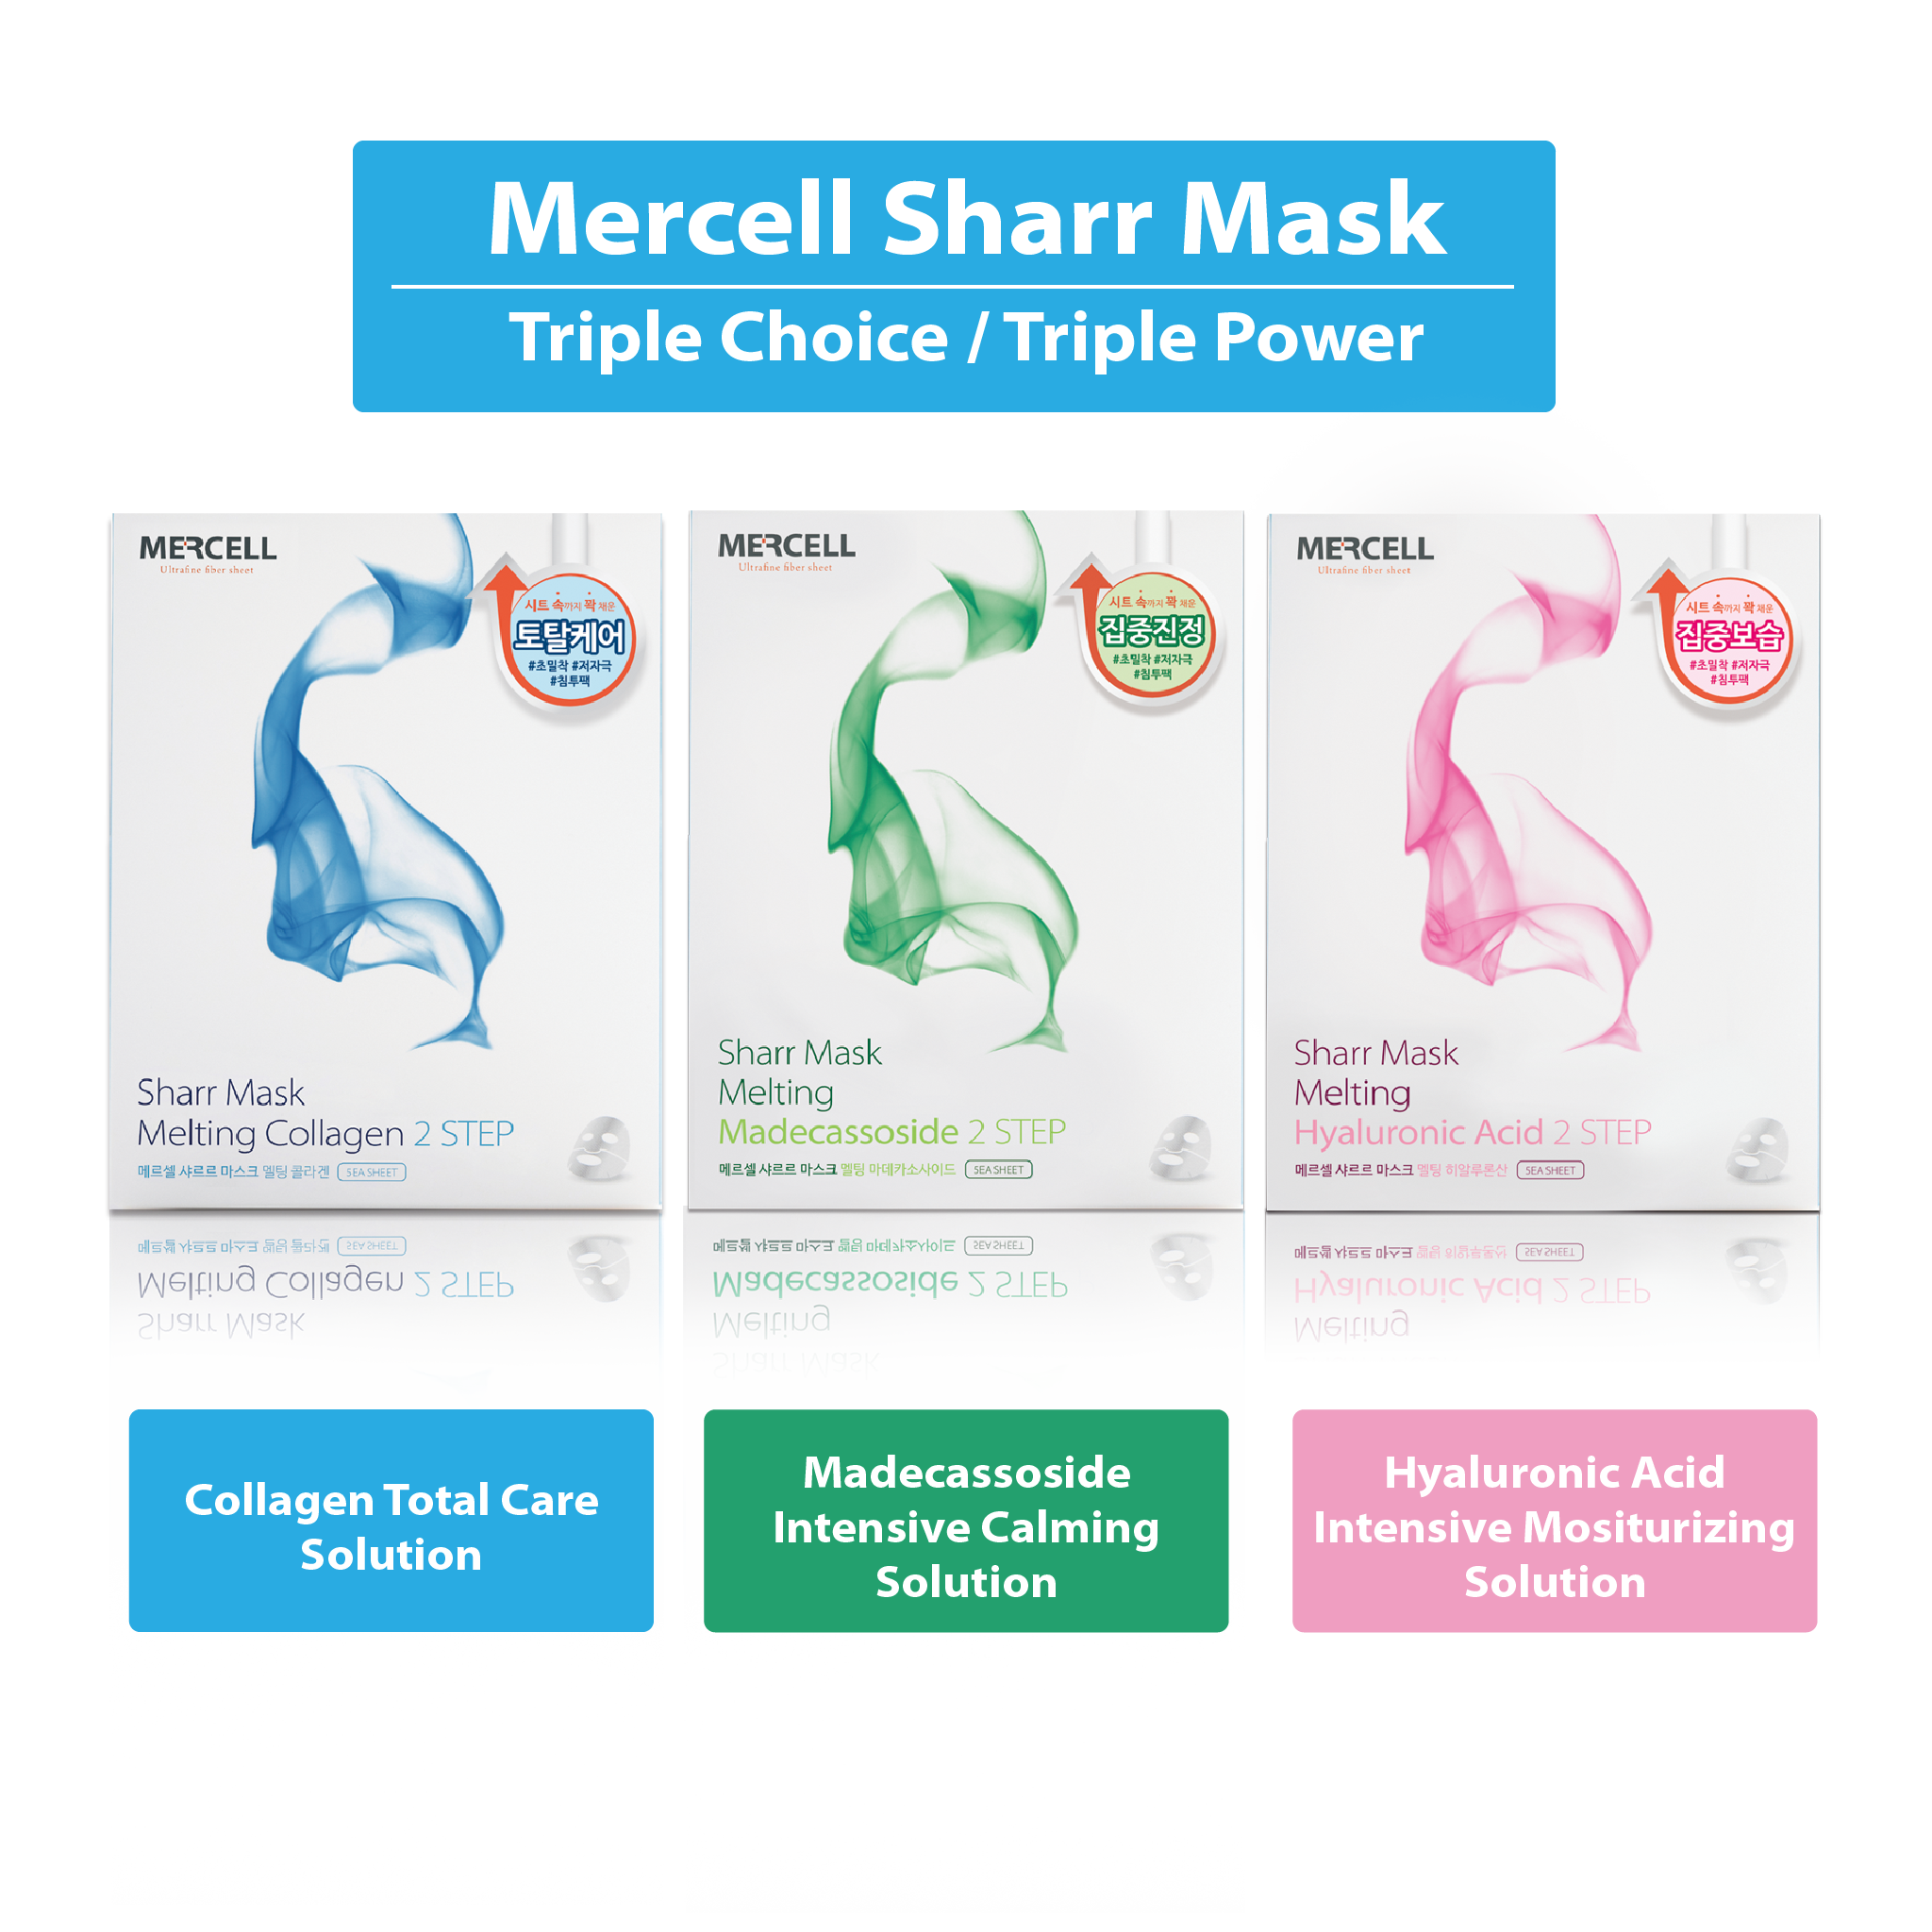 SHARRMASK - Melting Hyaluronic acid Facial Mask (Pink) - Shine 32